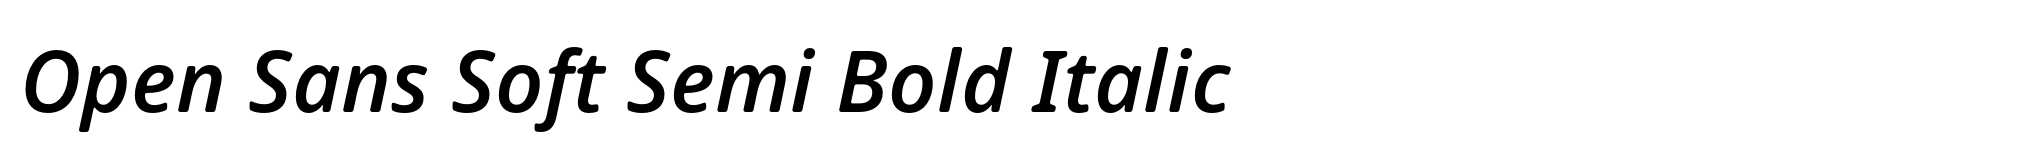 Open Sans Soft Semi Bold Italic image